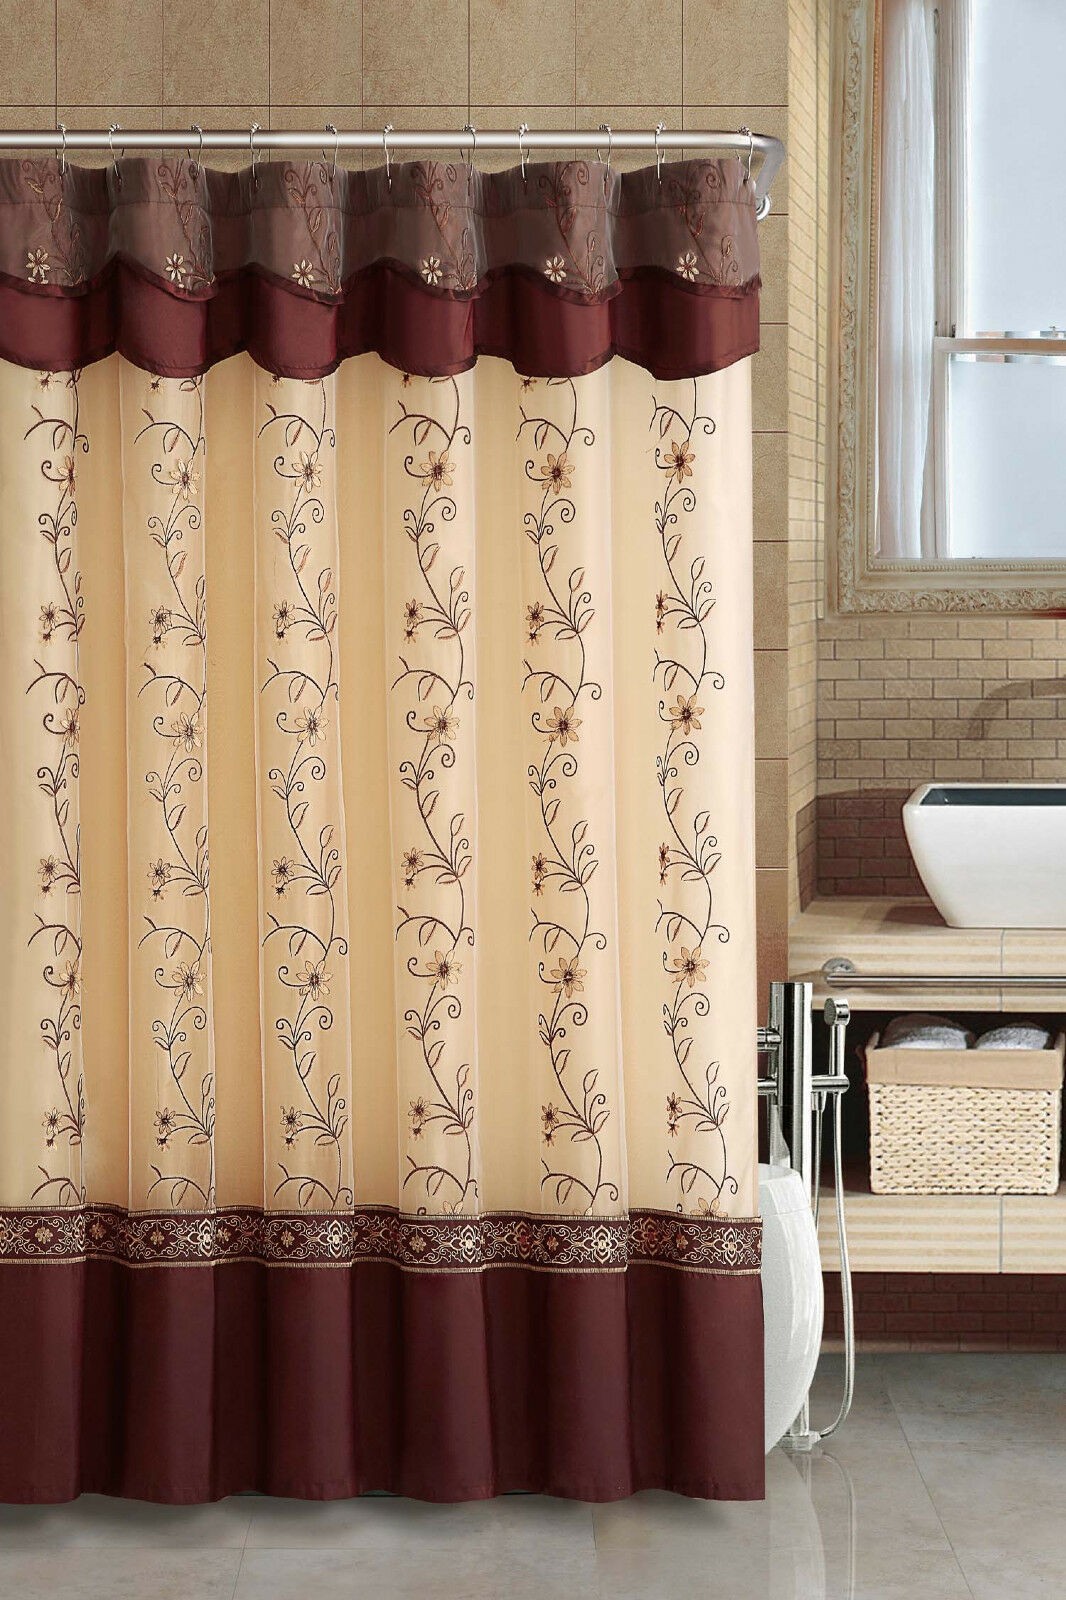 Vcny daphne embroidered sheer taffeta fabric shower